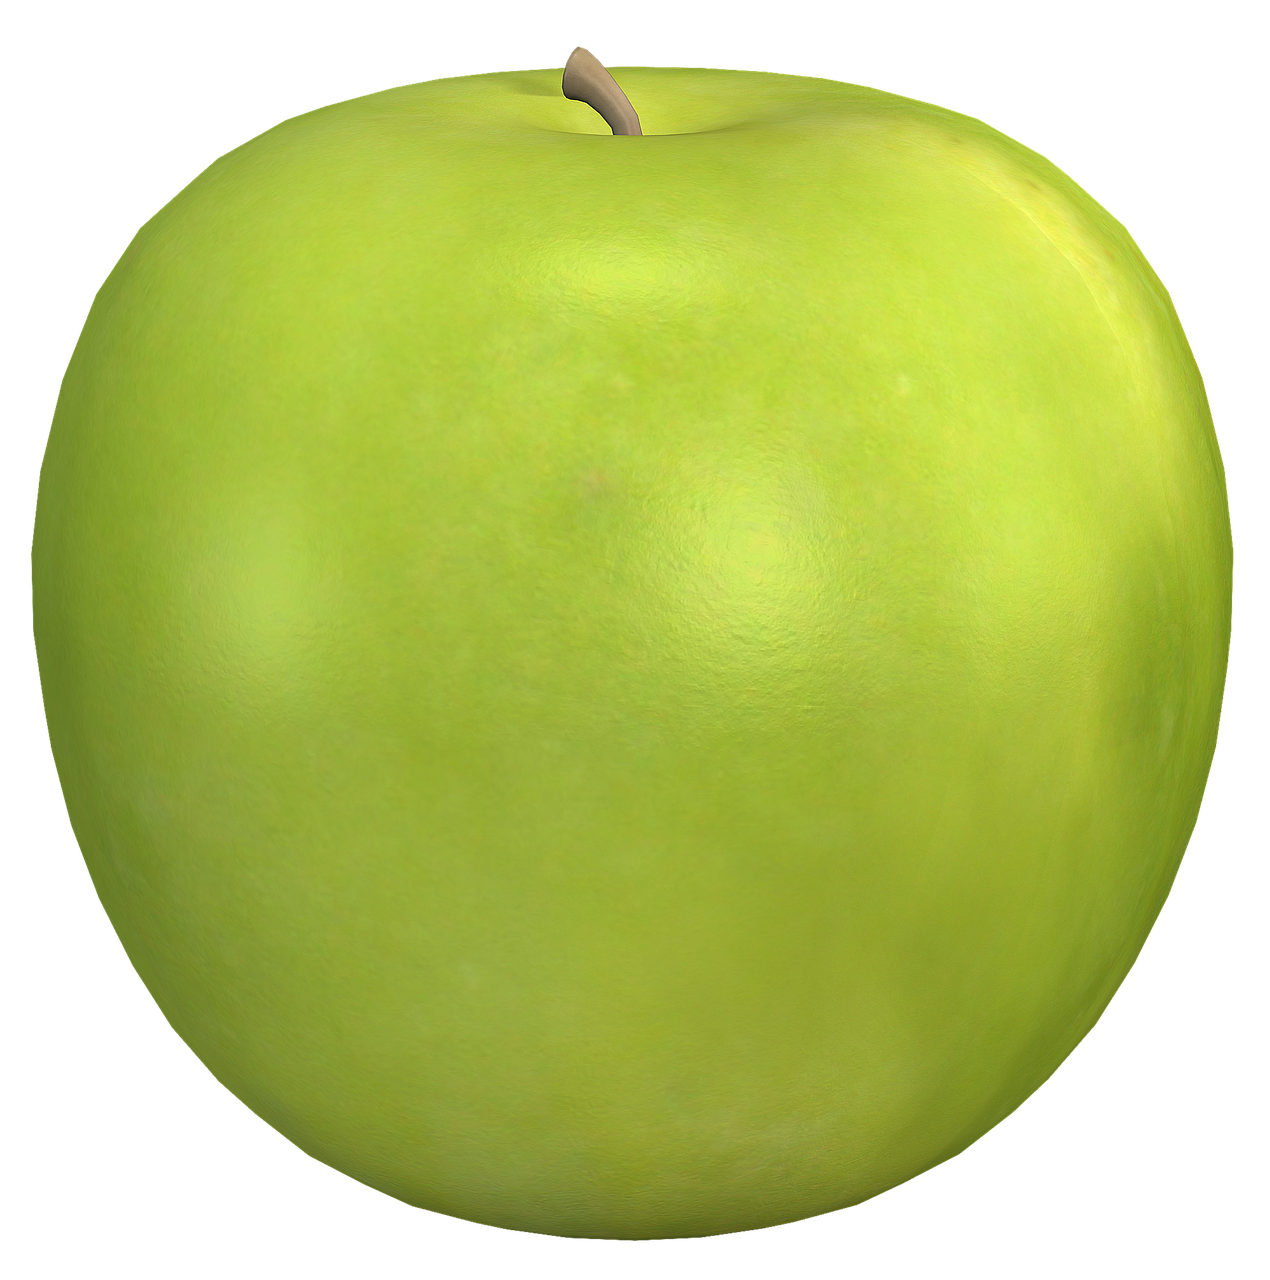 apple fruit graphic free photo